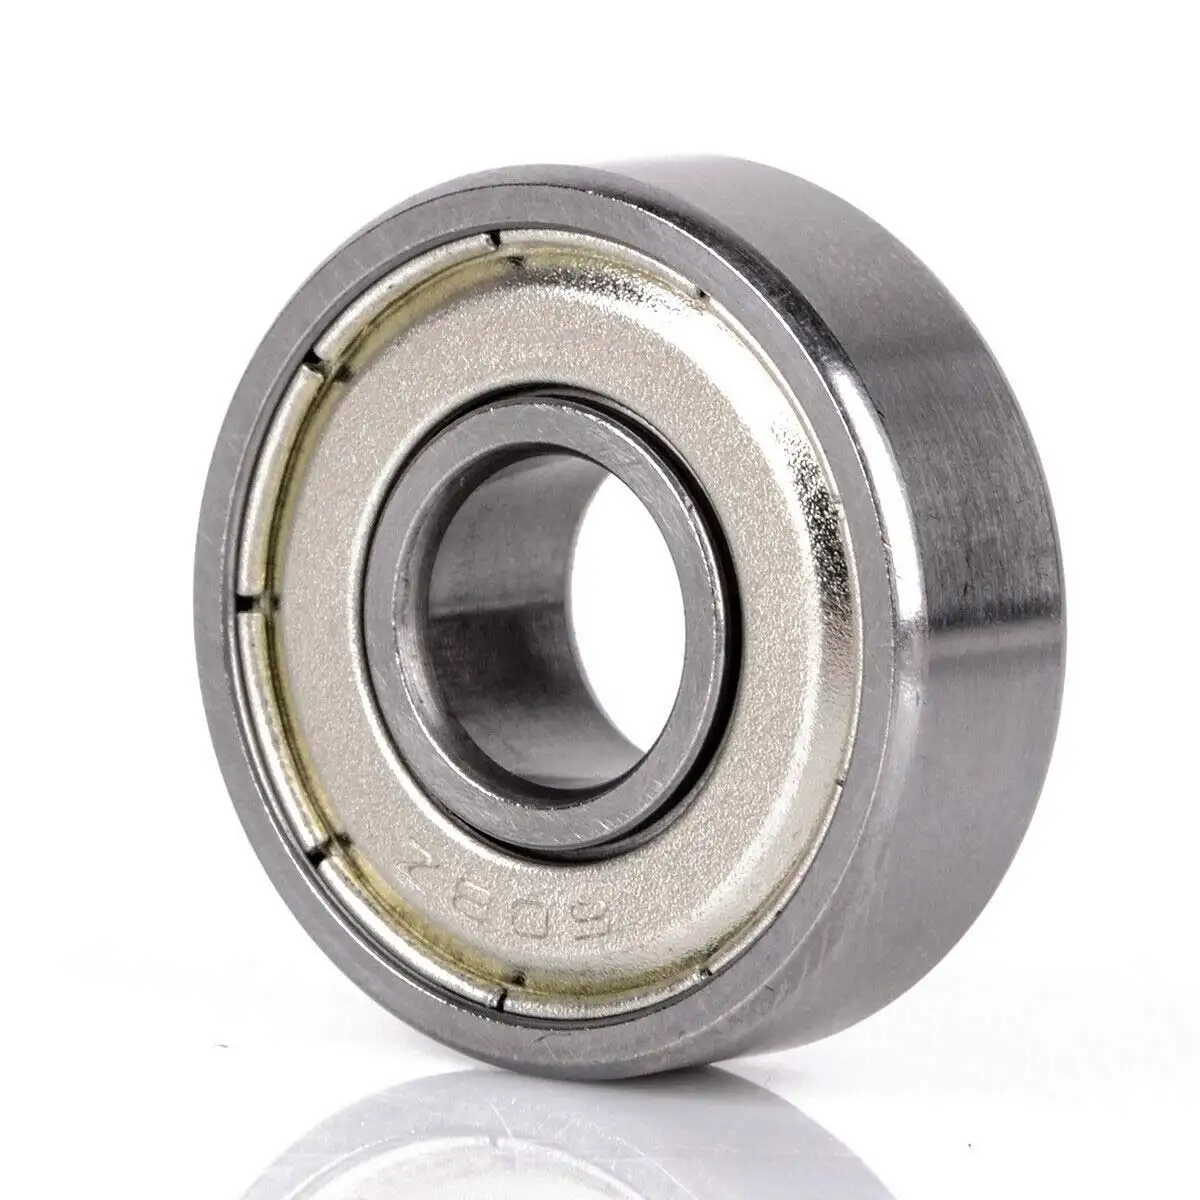 MTZC Ball bearing 608 608zz deep groove ball bearing 8x22x7mm high quality skate bearings